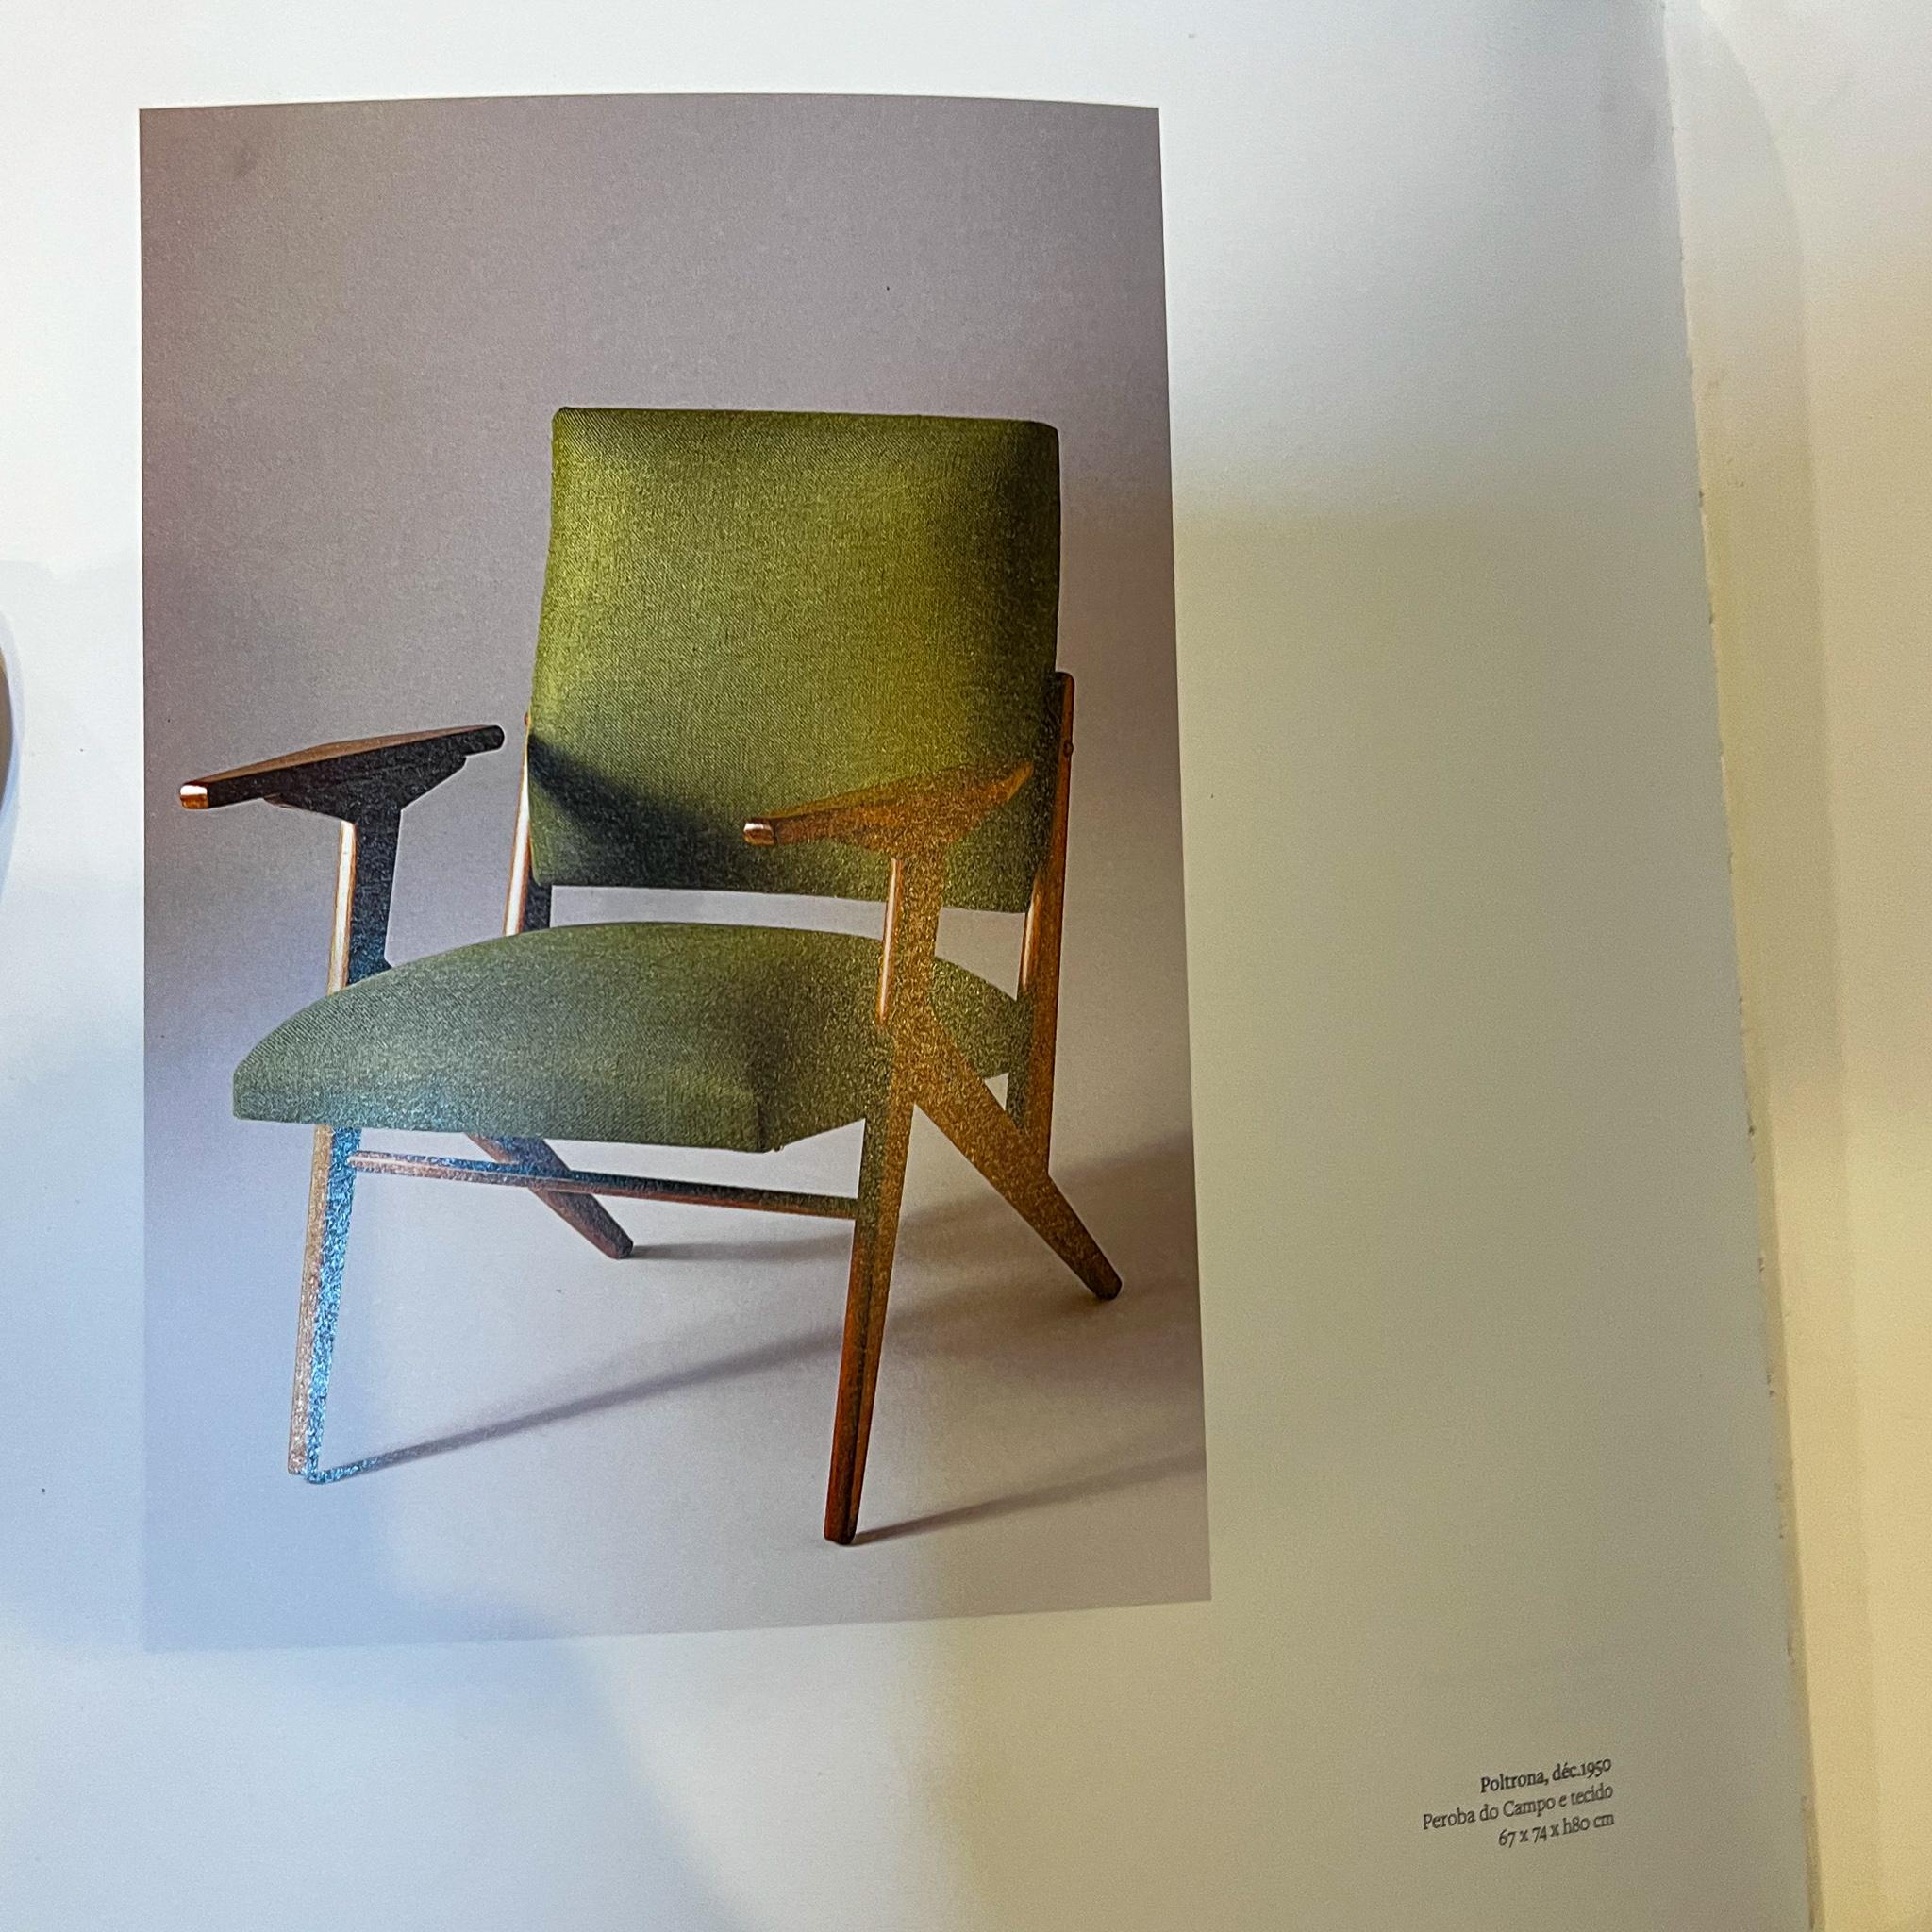 Midcentury Armchair in Wood & Green Faux Leather Jose Zanine Caldas c1950 Brazil For Sale 6